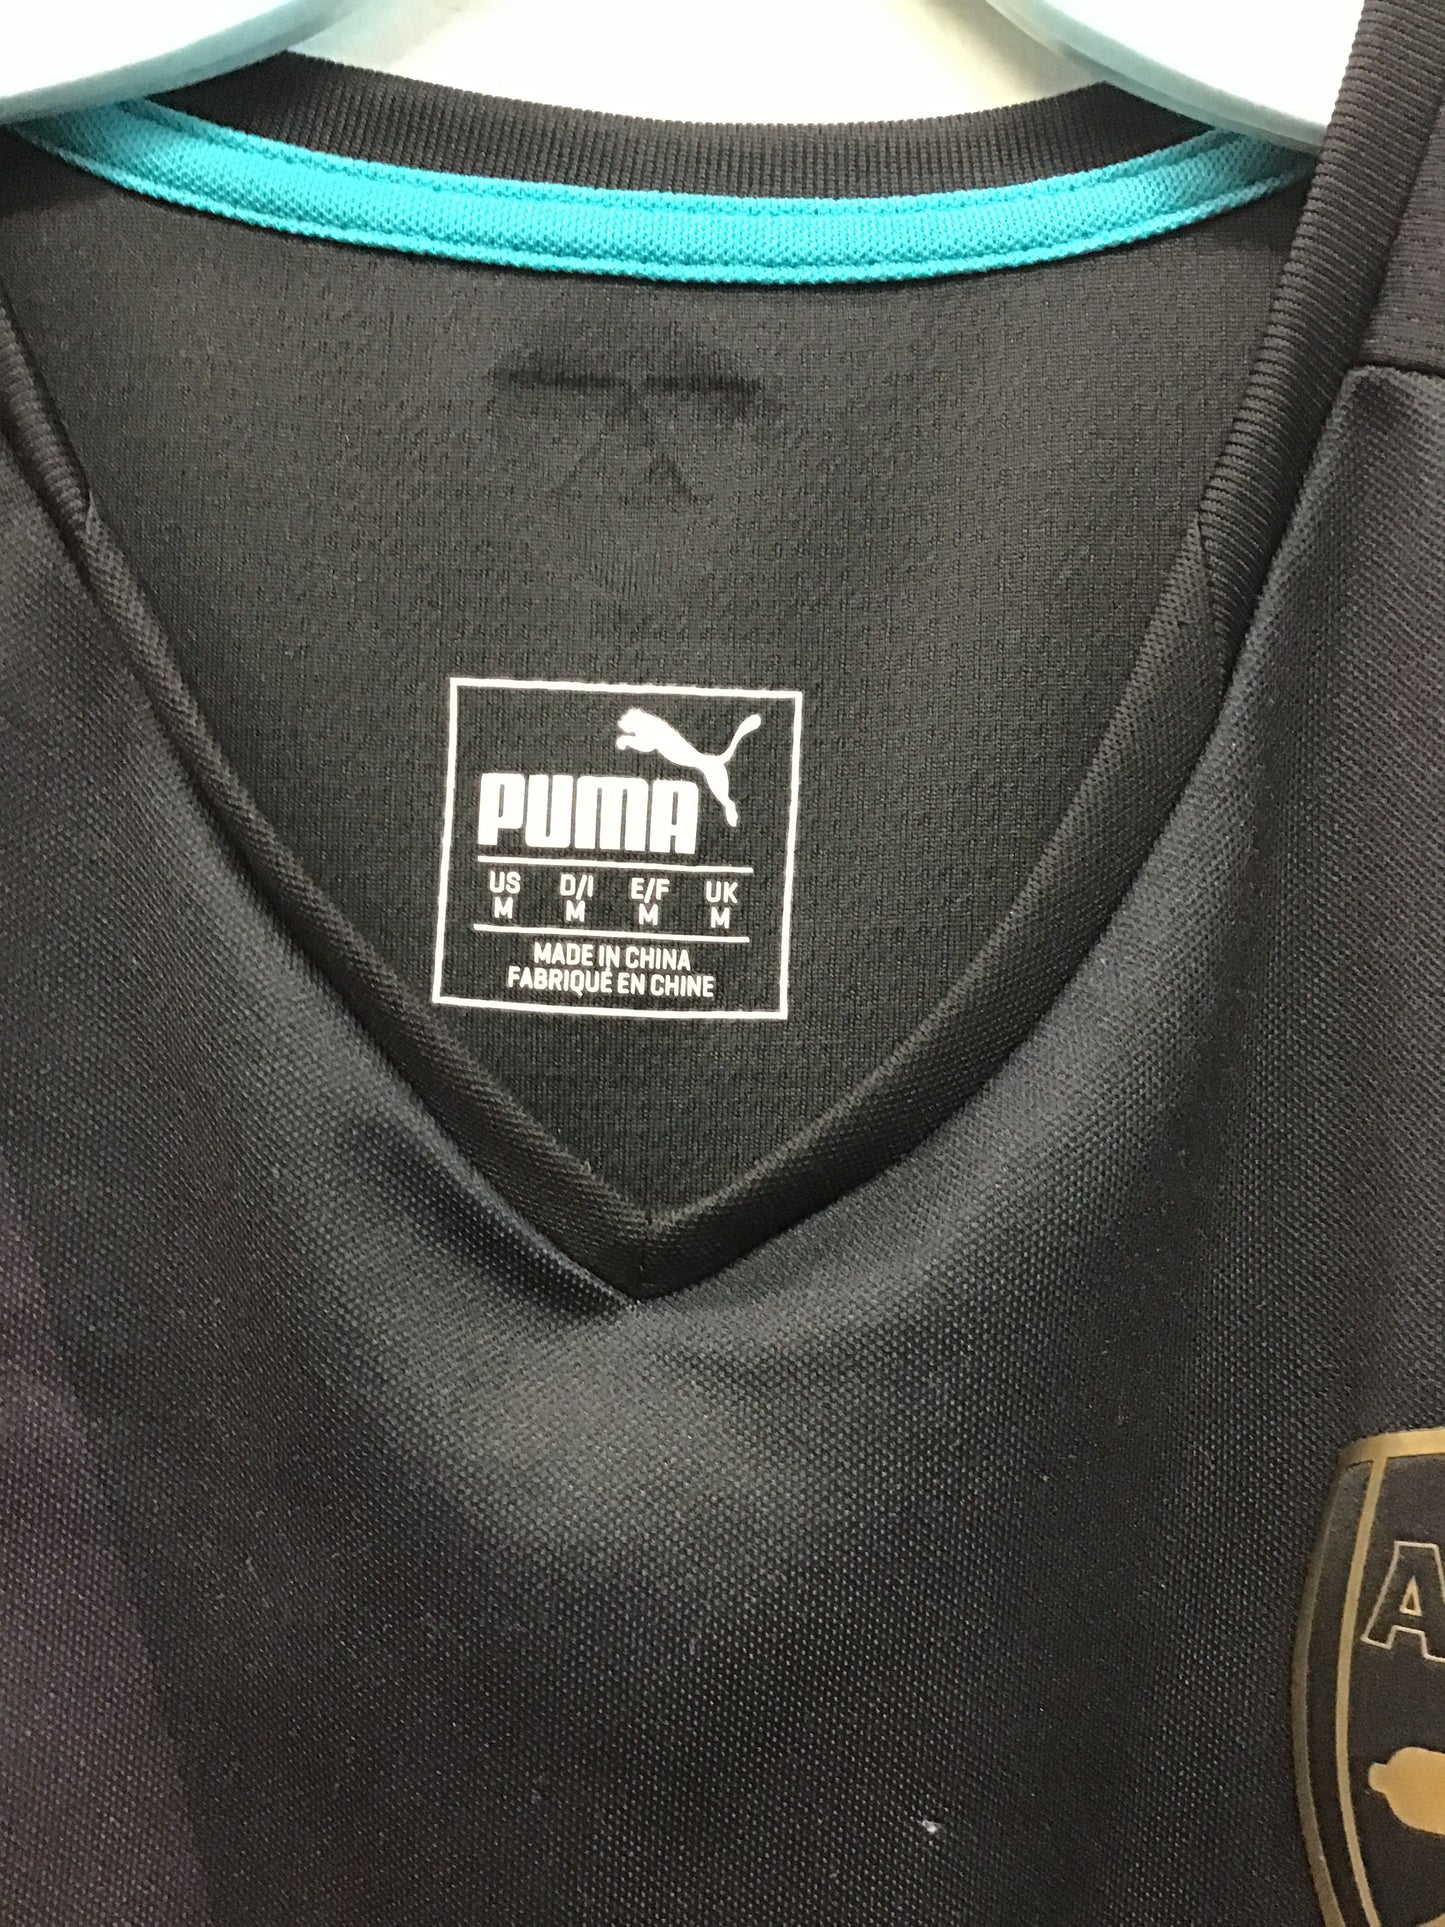 Puma Arsenal Authentic Jersey, Size M